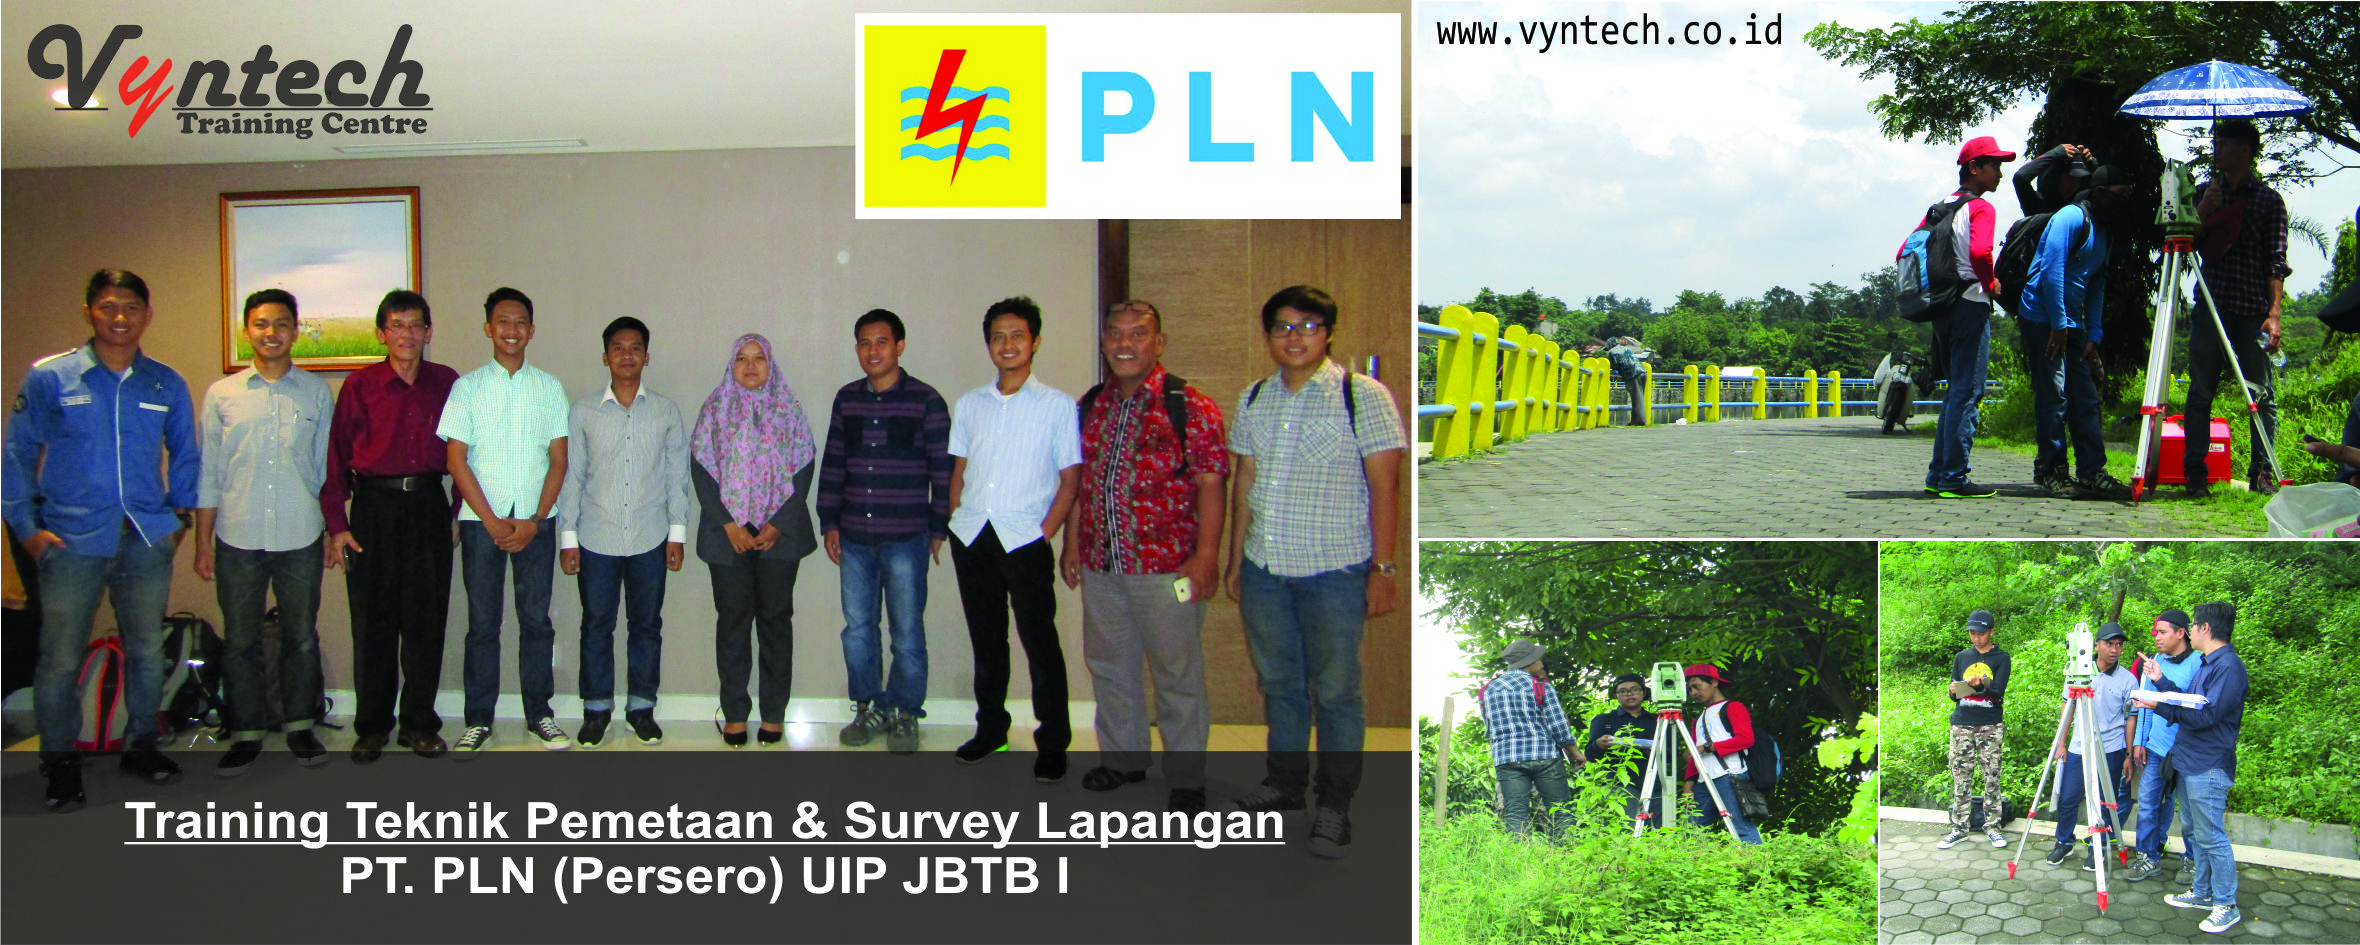 20161123 Training Teknik Pemetaan & Survey Lapangan - PT. PLN (Persero) UIP JBTB I